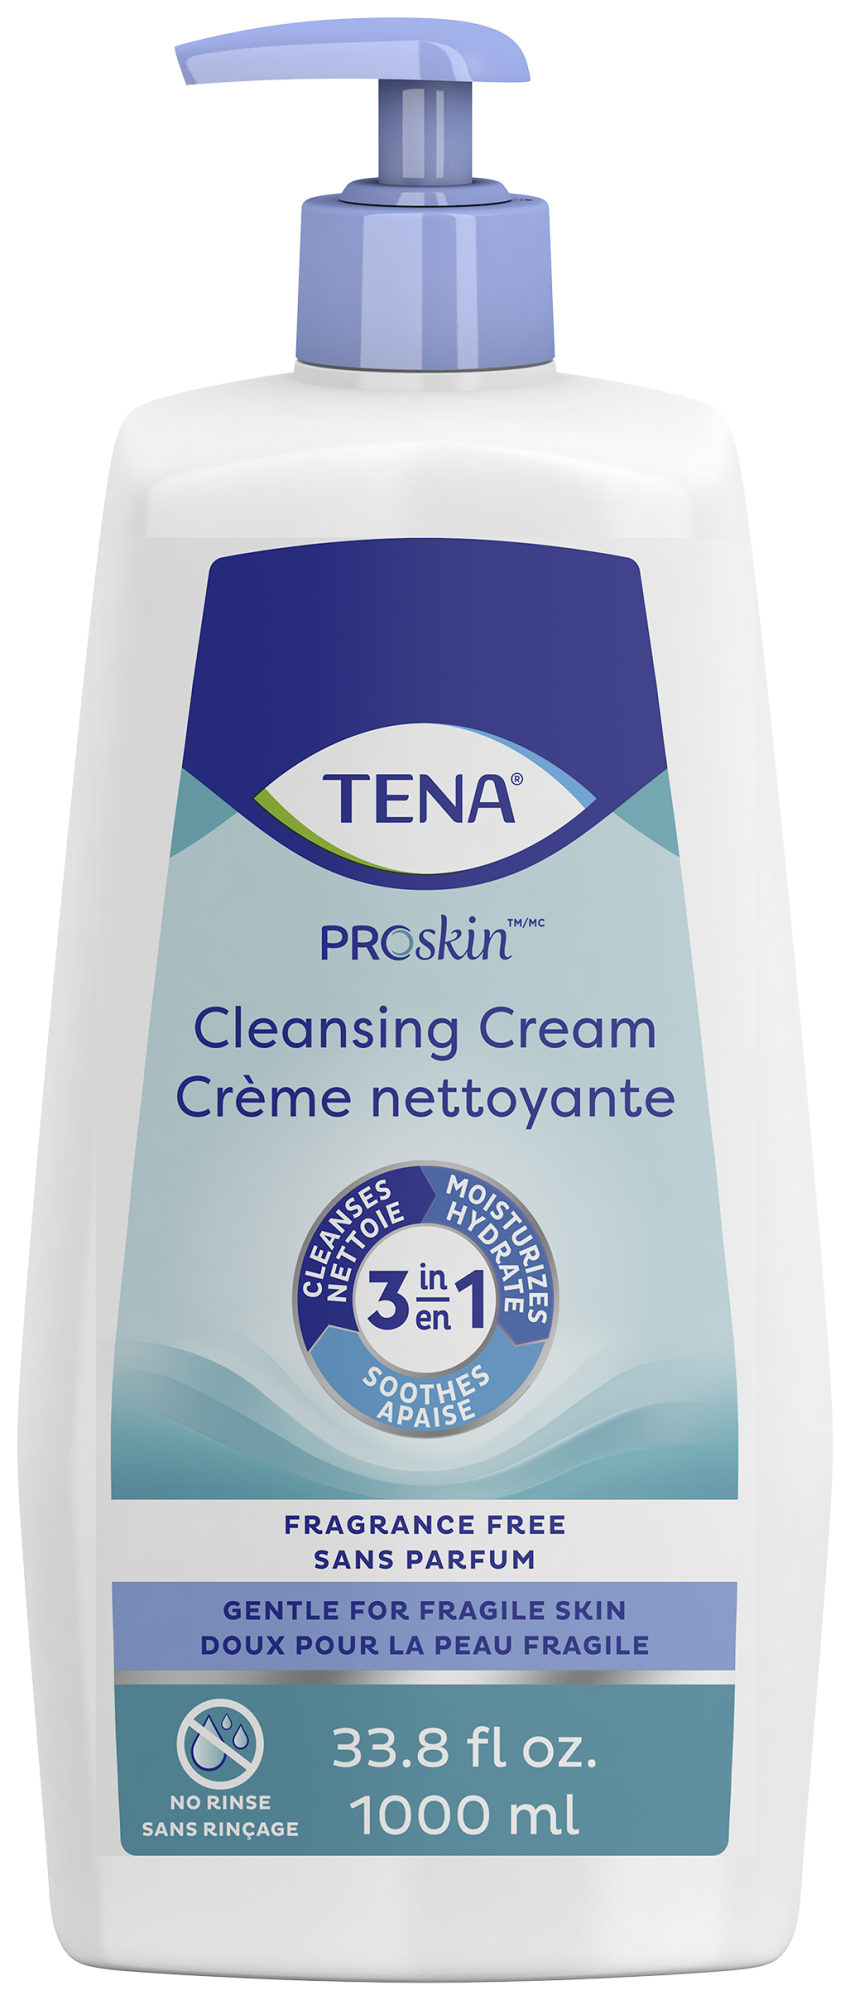 TENA ProSkin Cleansing Cream | Fragrance Free